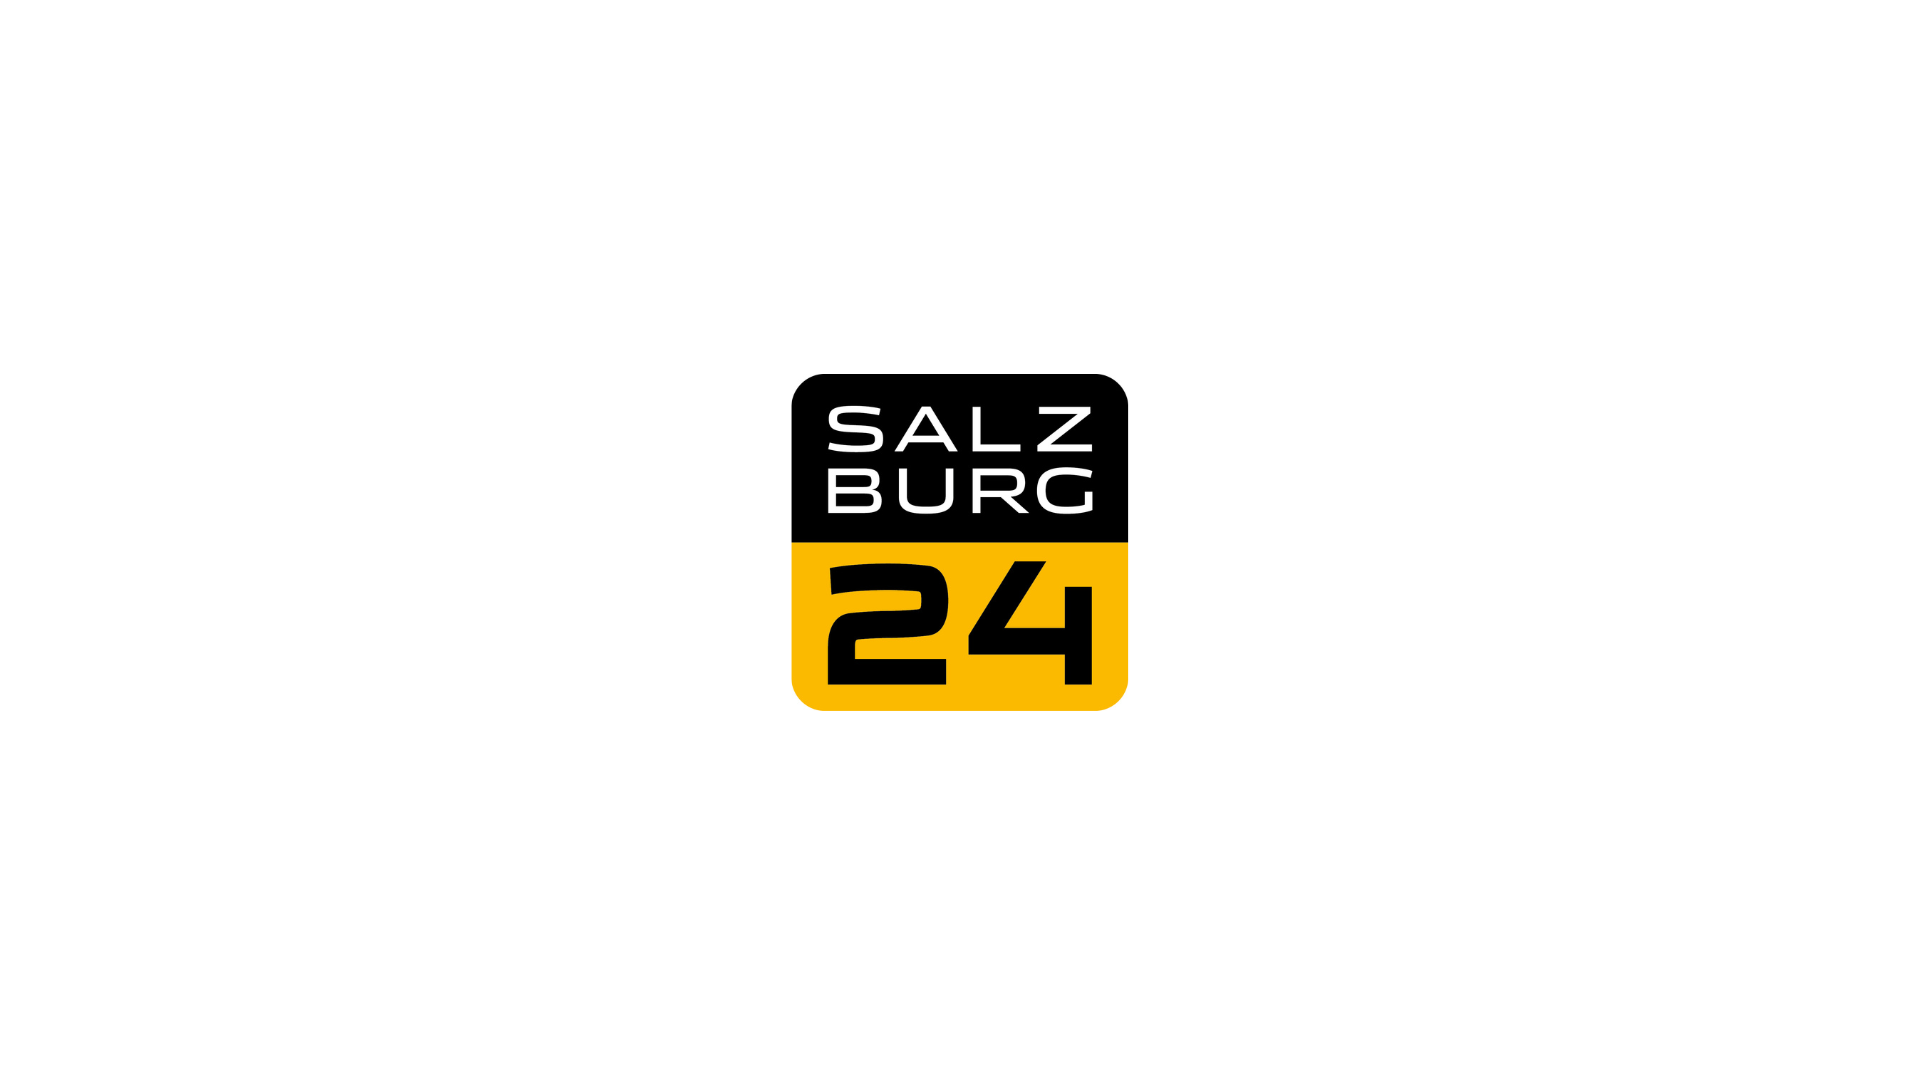 https://www.levelup-salzburg.at/wp-content/uploads/2021/11/Salzburg24.png